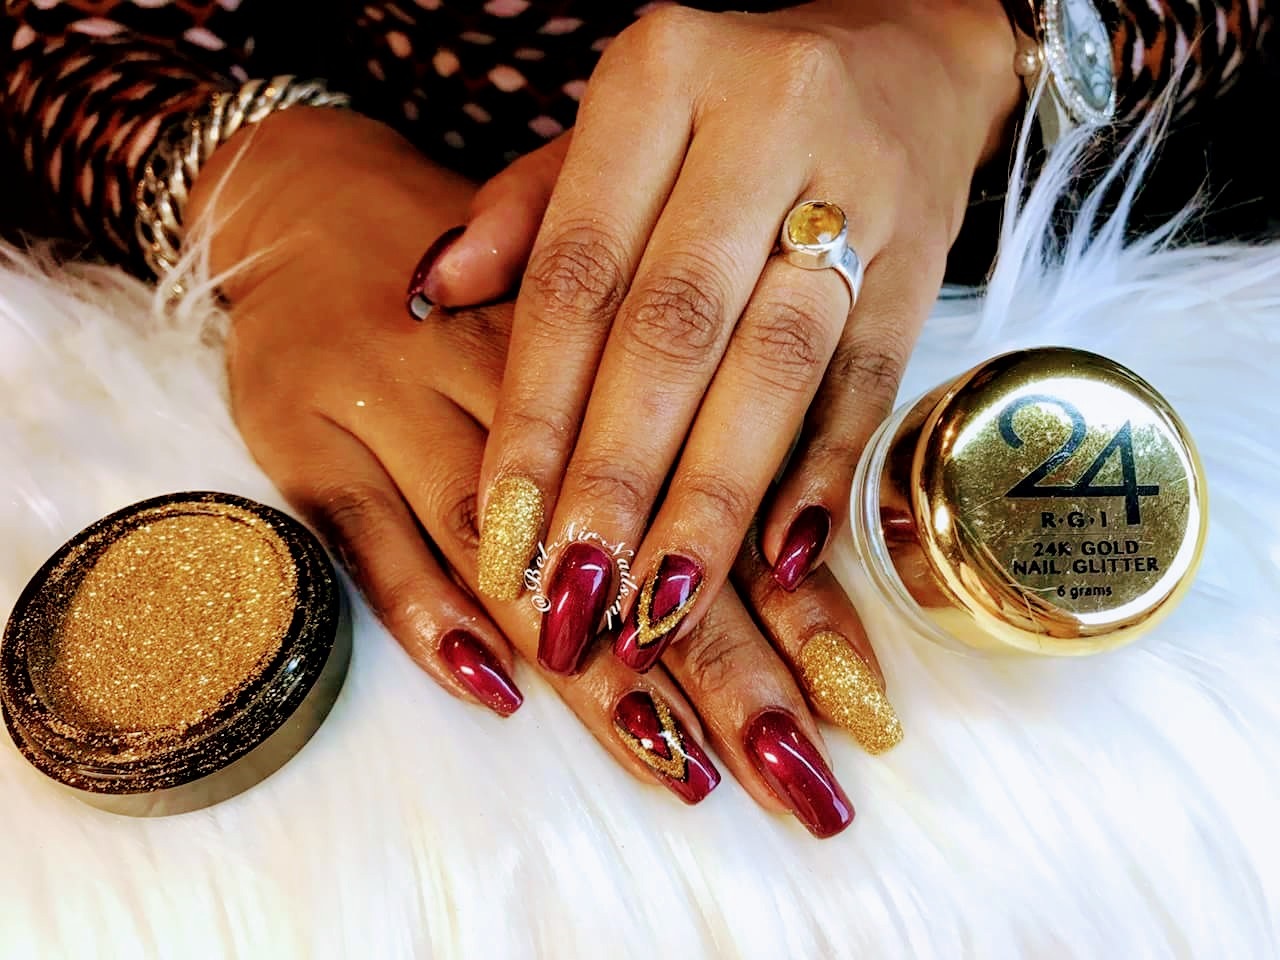 24 Karat Genuine Gold Loose Glitter — 24 by RGI